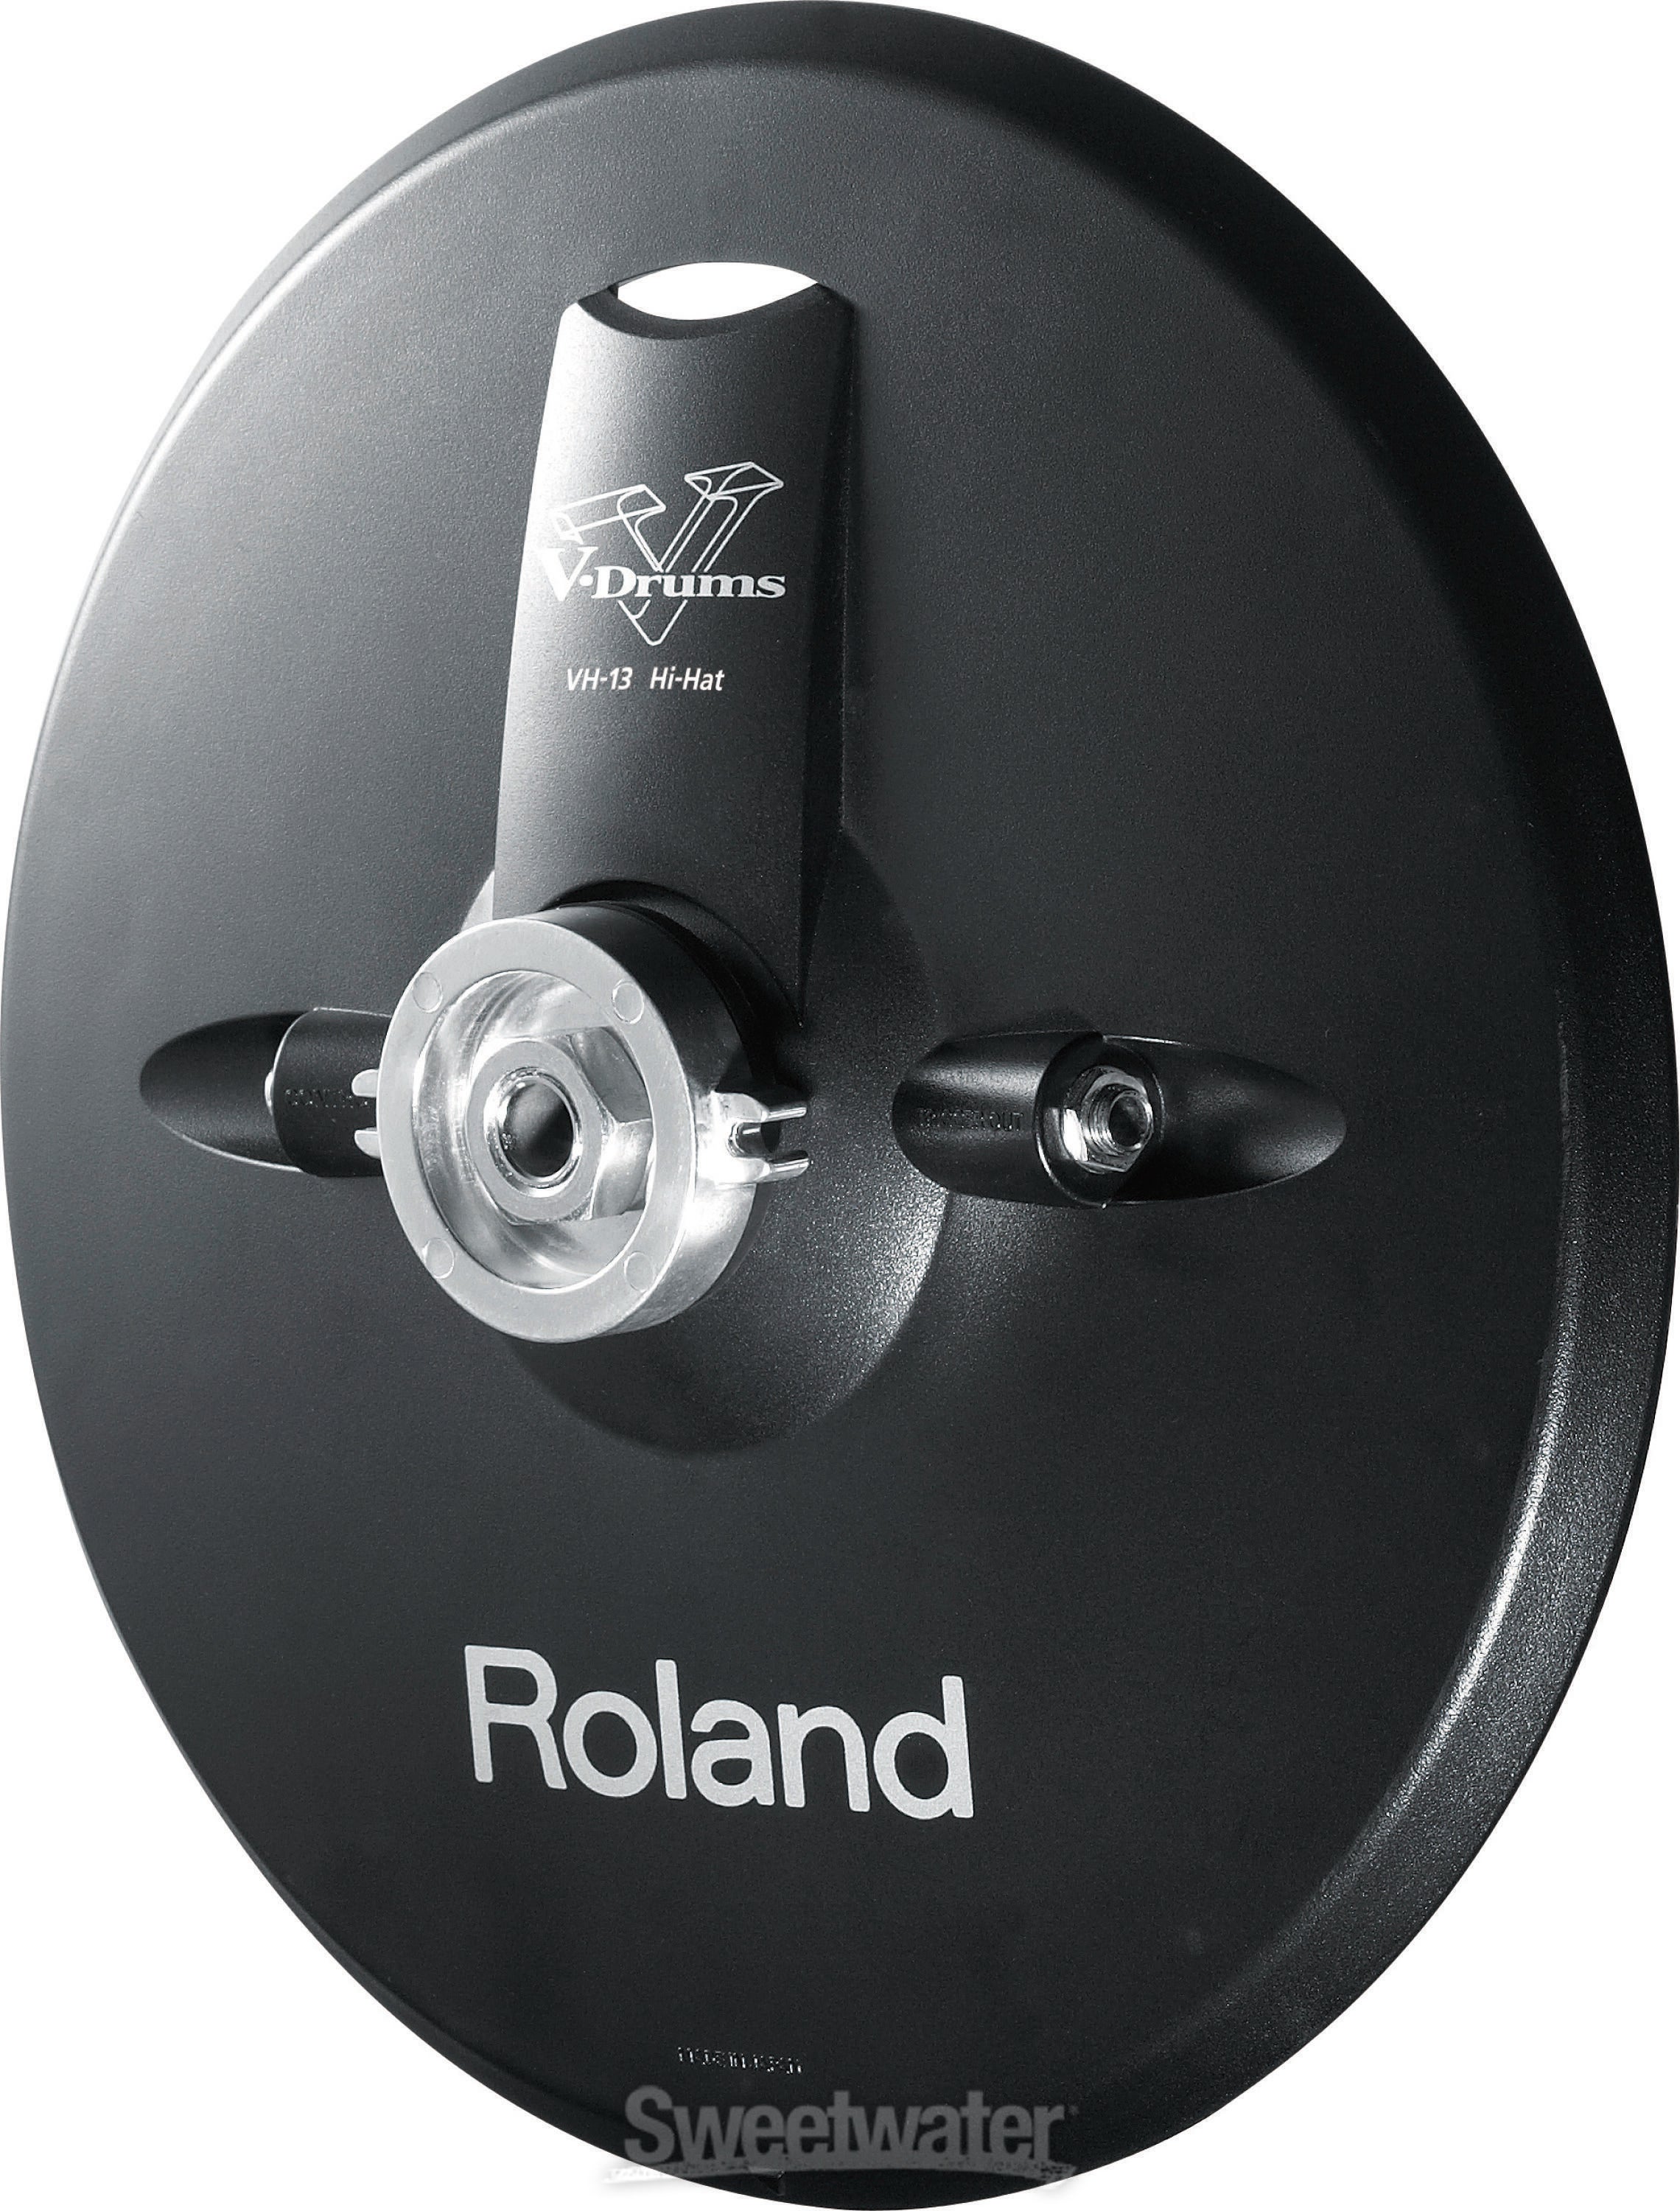 ROLAND VH-13-MG V-Hi-Hat Metallic Gray ローランド 電子ドラム 